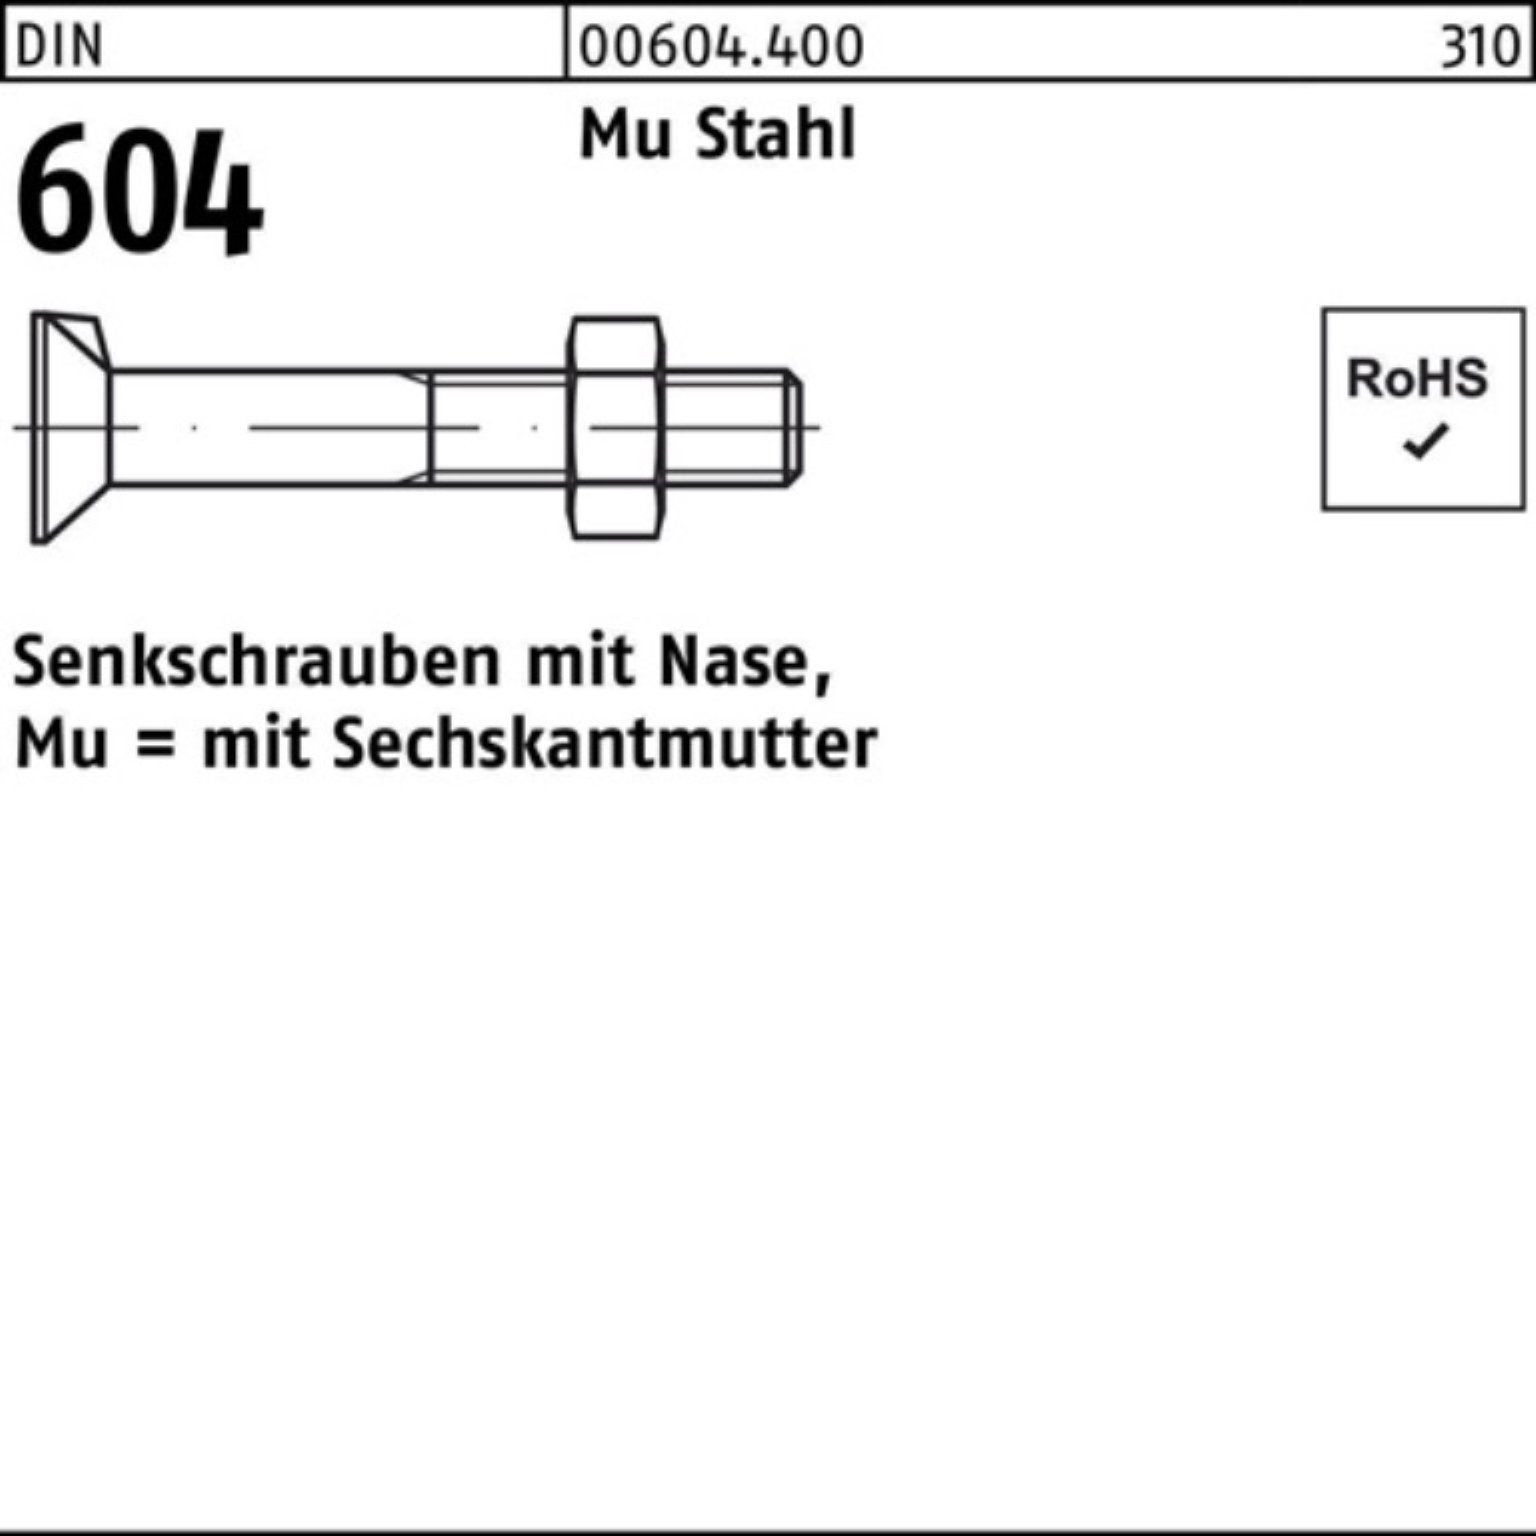 [Besonderheit, Qualitätsprodukte] Reyher Senkschraube 500er Pack Senkschraube DIN 20 Mu 4.6 Nase/6-ktmutter 604 Stahl M6x 50